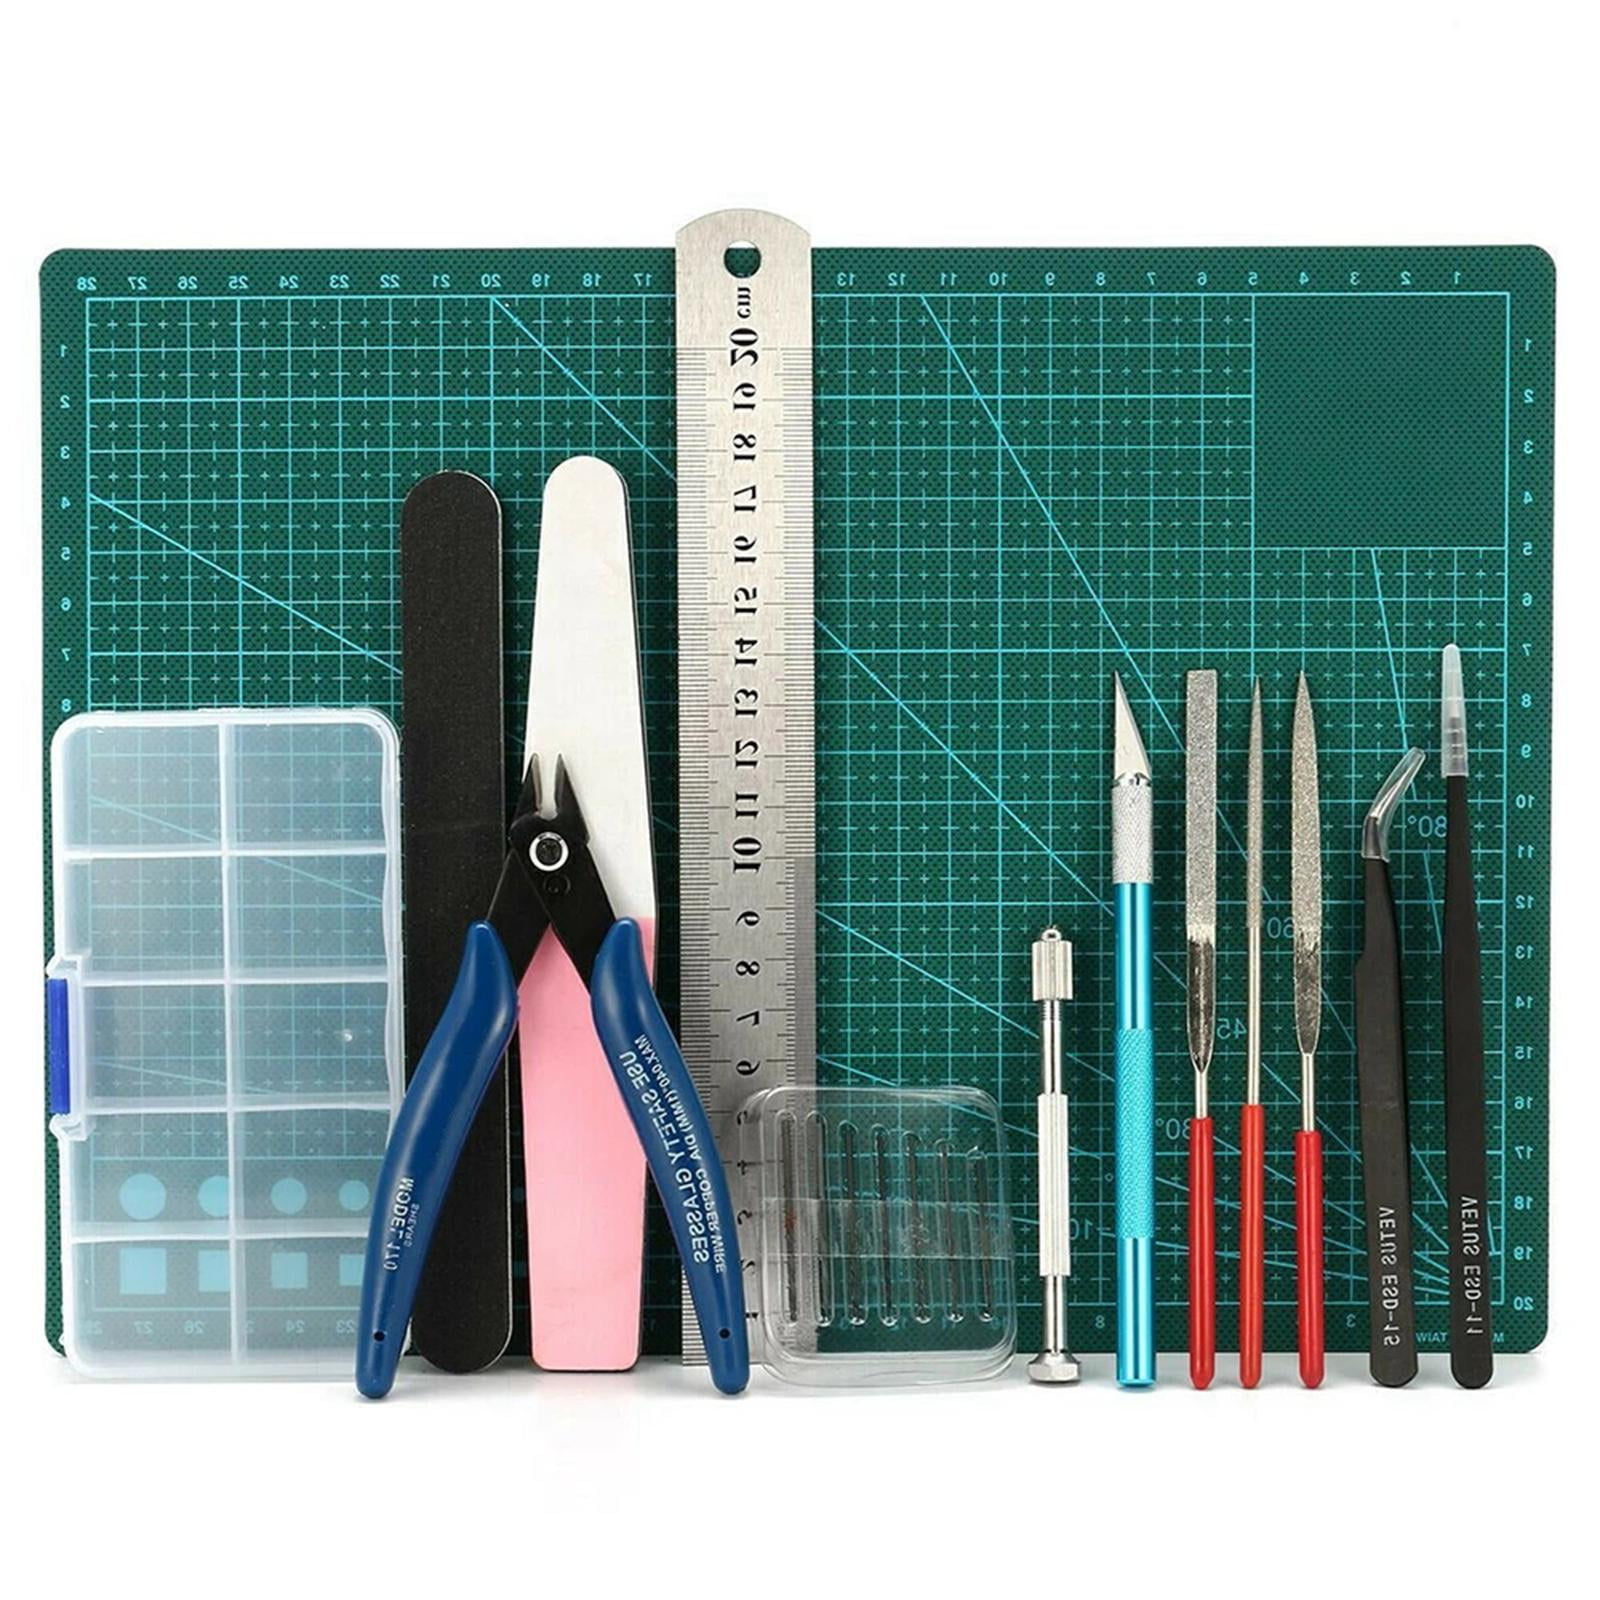 DIY Modeler Basic Tools Craft Set Hobby Model Building Kit Grinding Accessories 